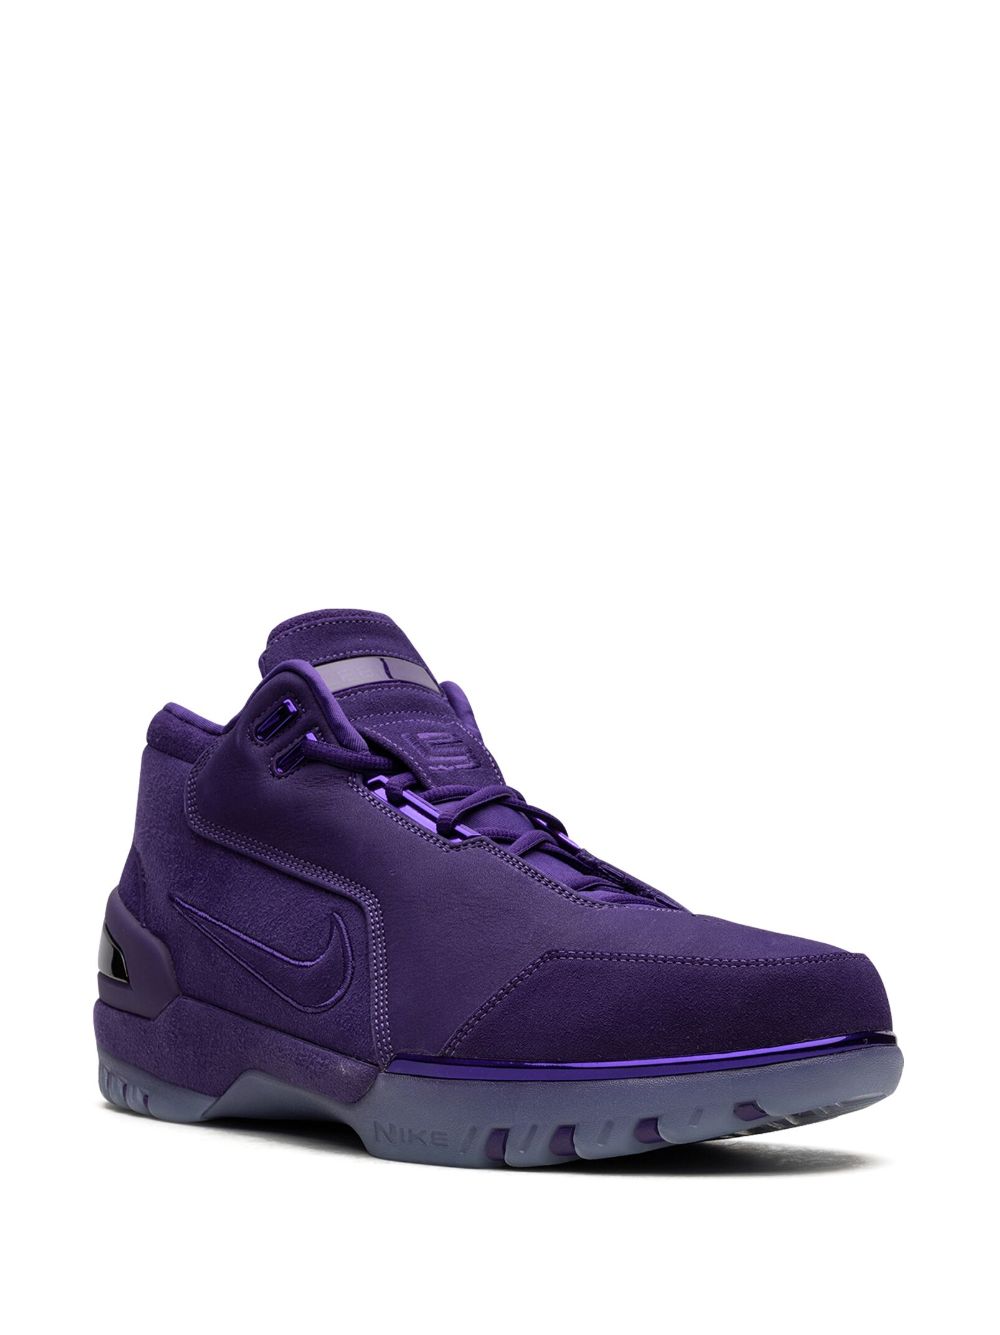 Shop Nike Air Zoom Generation "court Purple" Sneakers